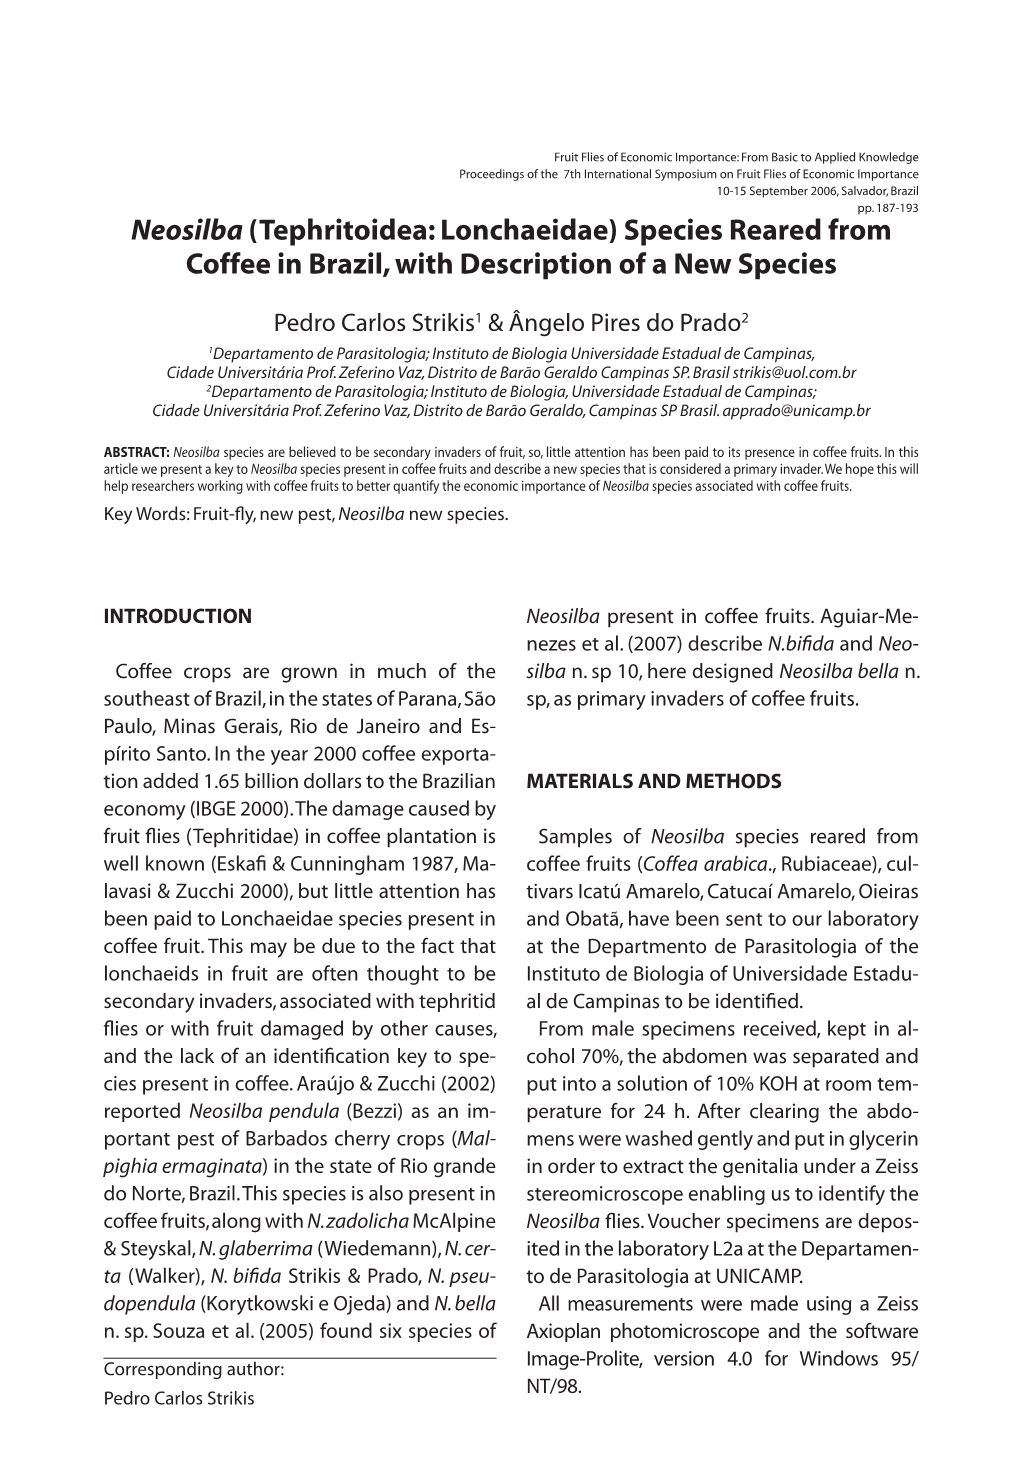 Neosilba (Tephritoidea: Lonchaeidae) Species Reared from Coffee in Brazil, with Description of a New Species